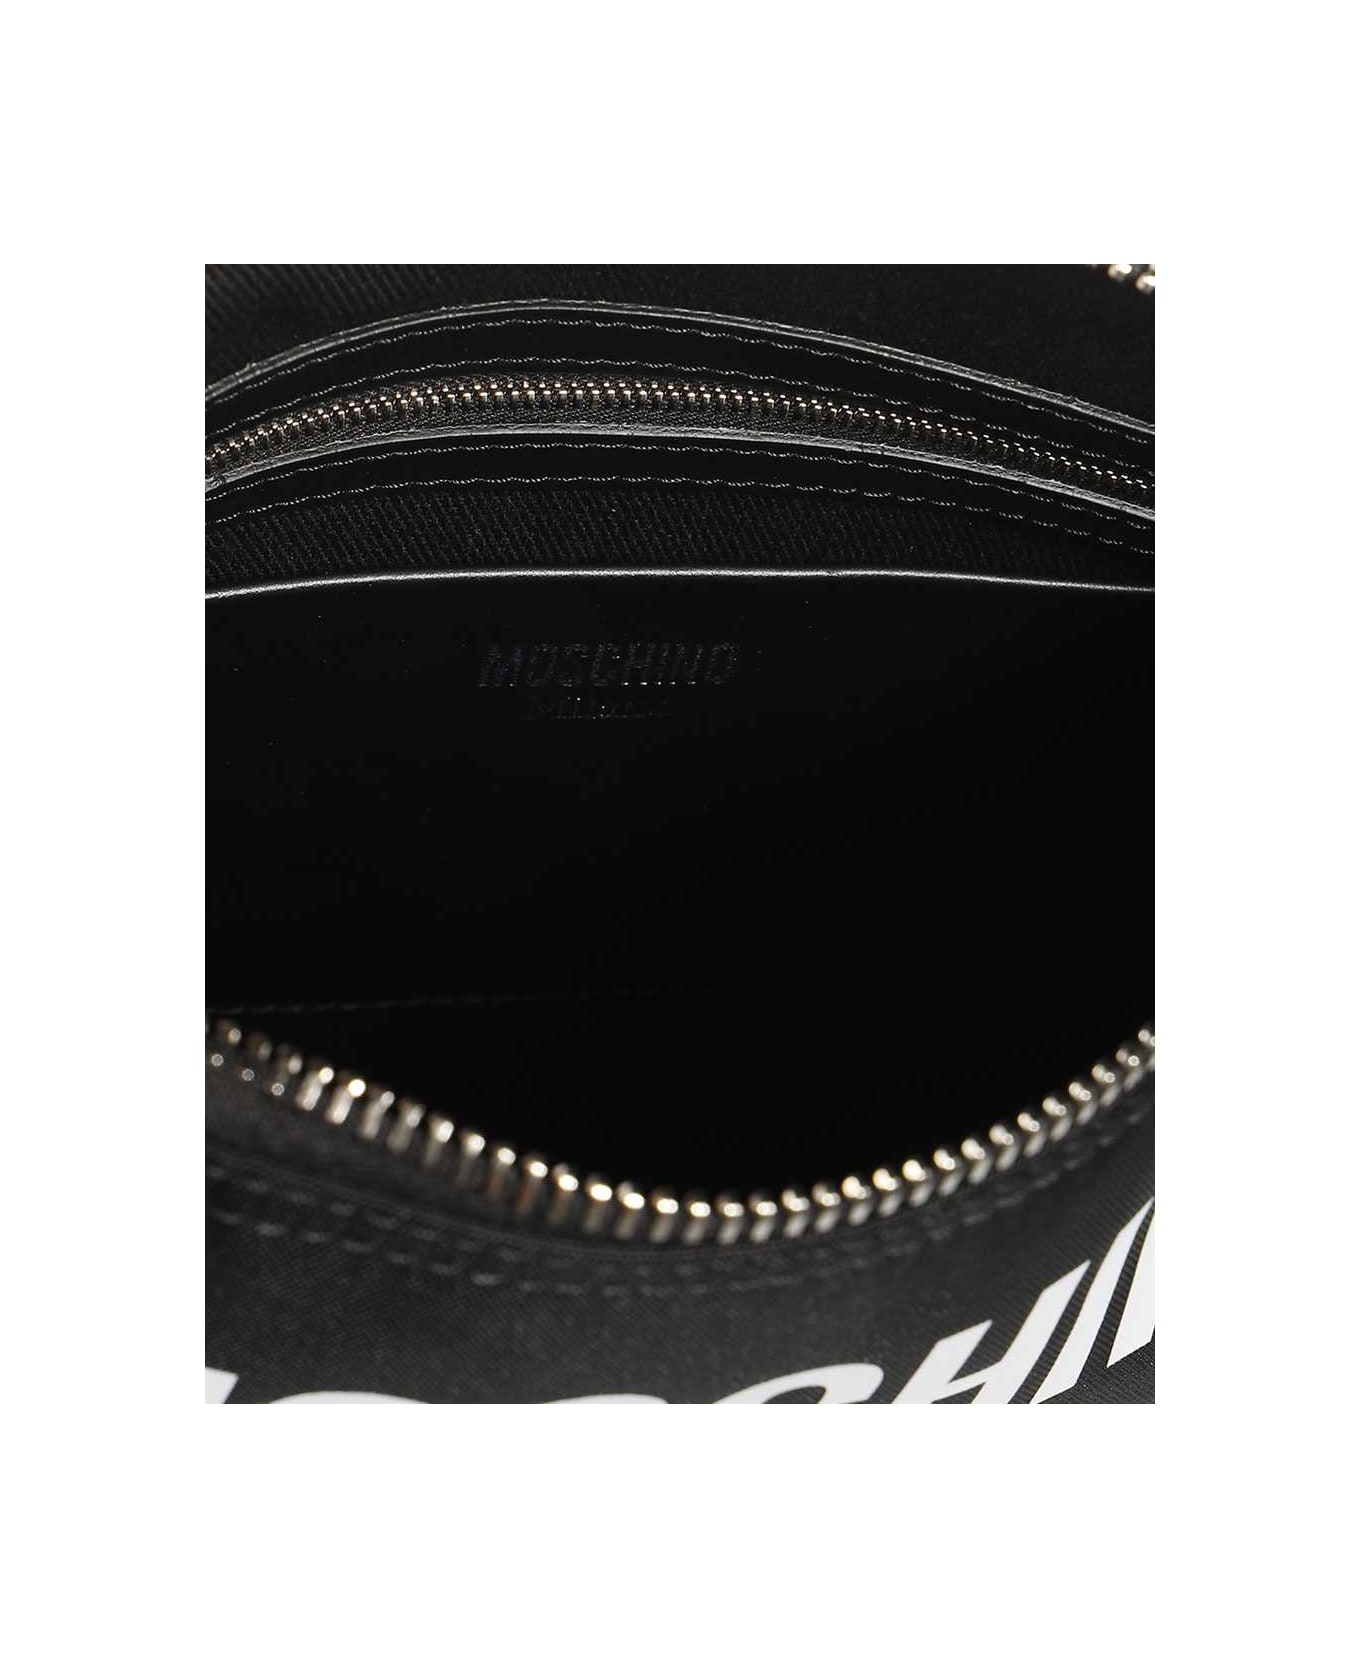 Moschino Messenger Bag With Logo - black ショルダーバッグ